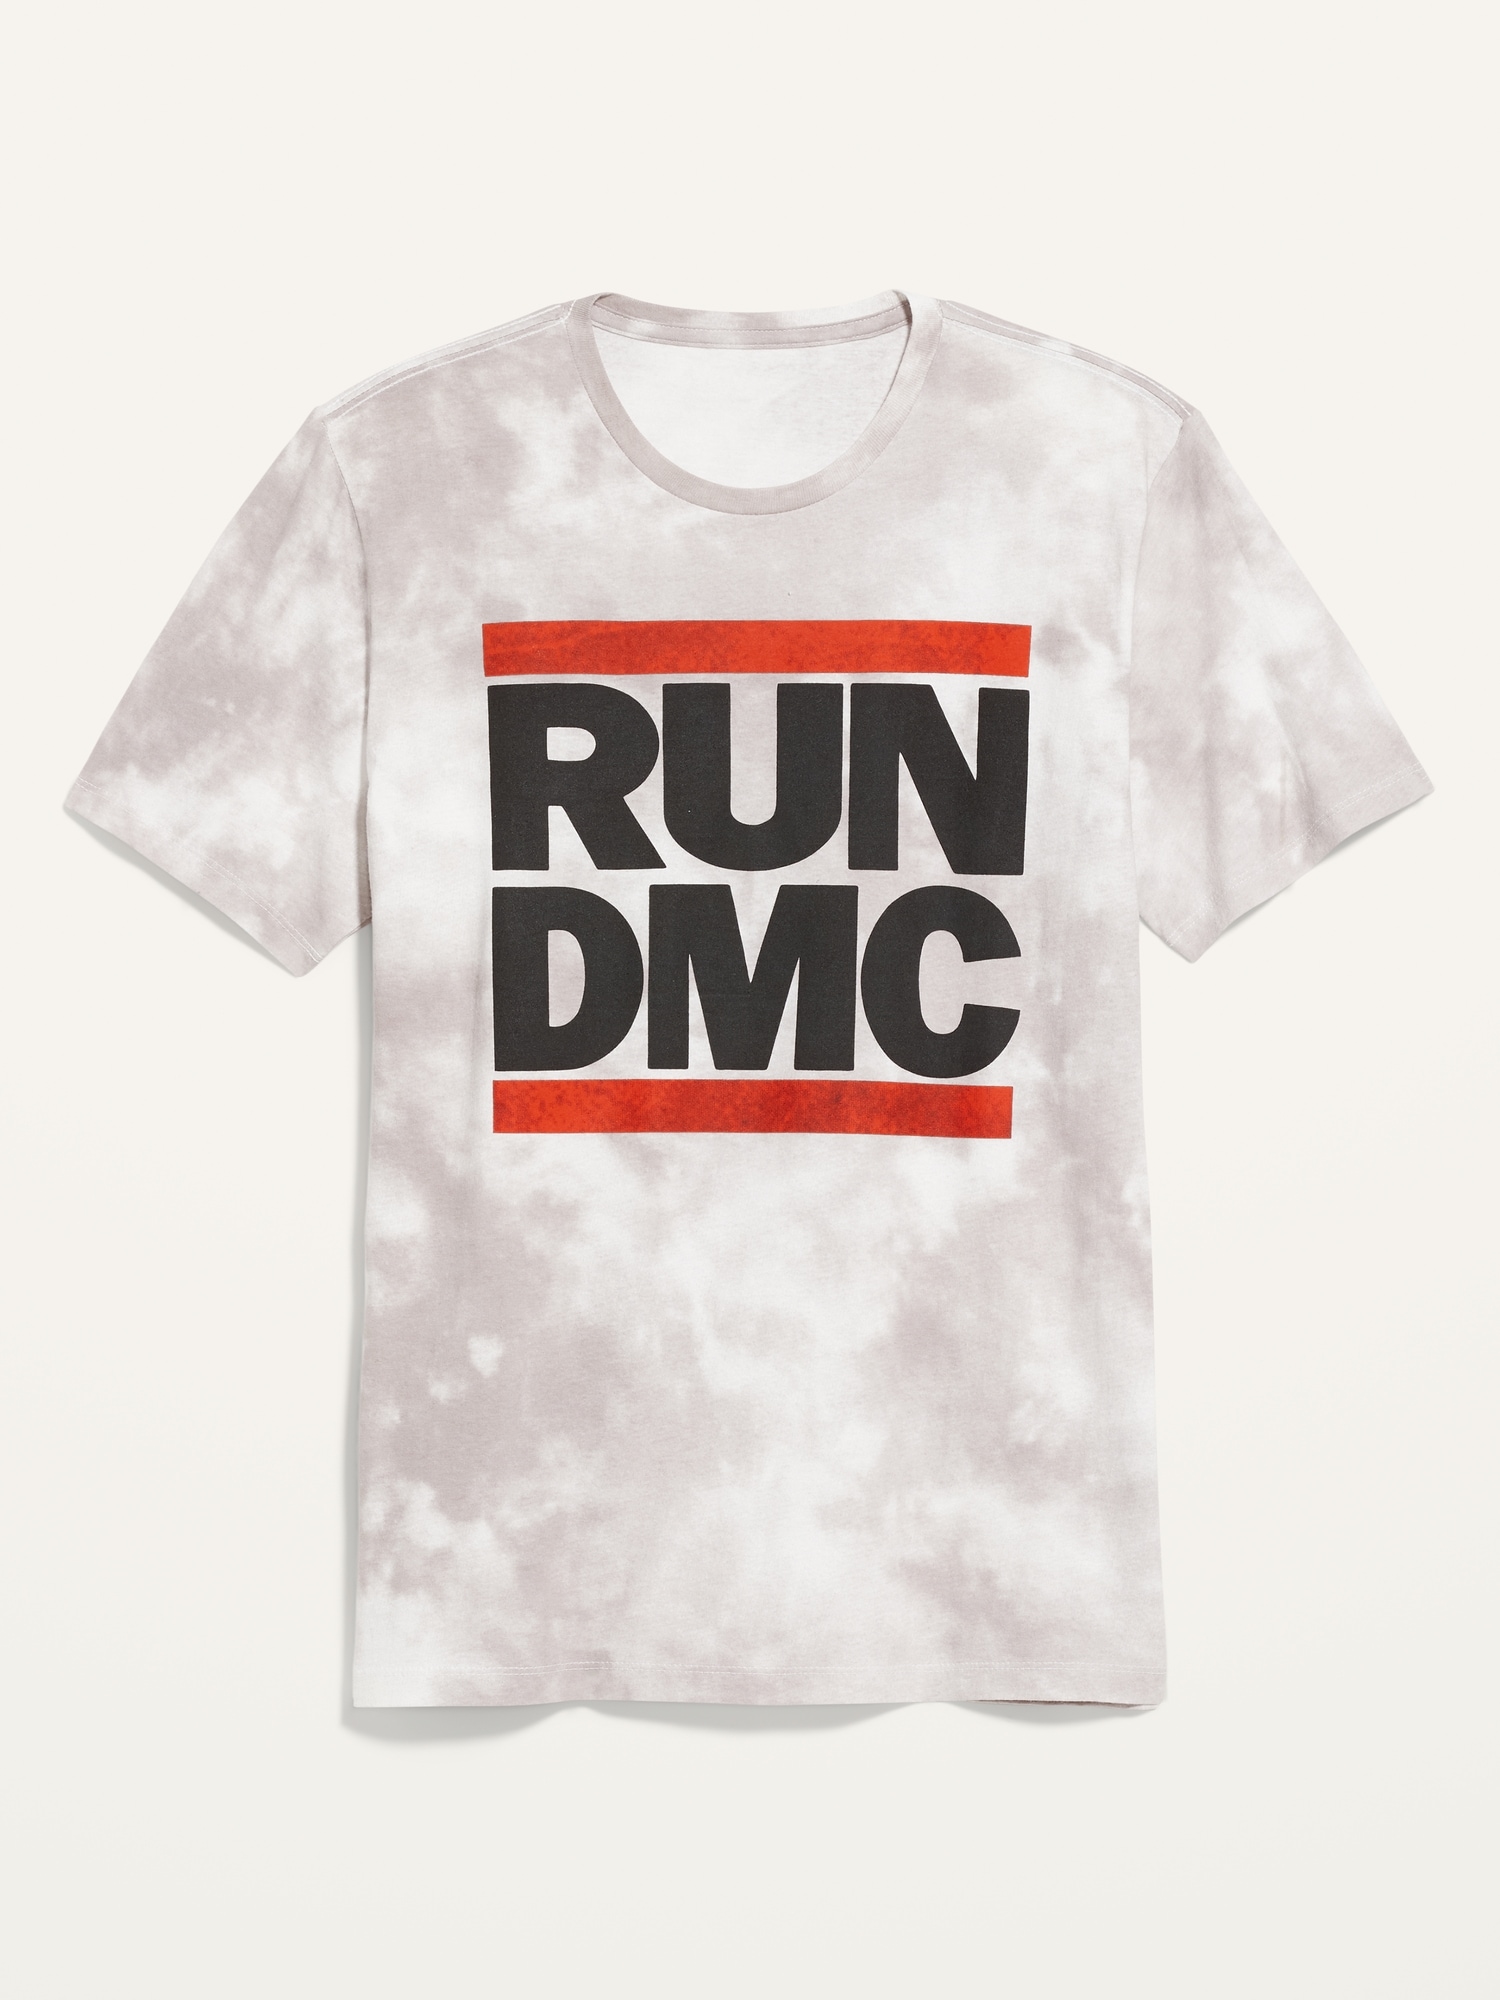 RUN DMC™ Tie-Dye Gender-Neutral Graphic T-Shirt for Adults